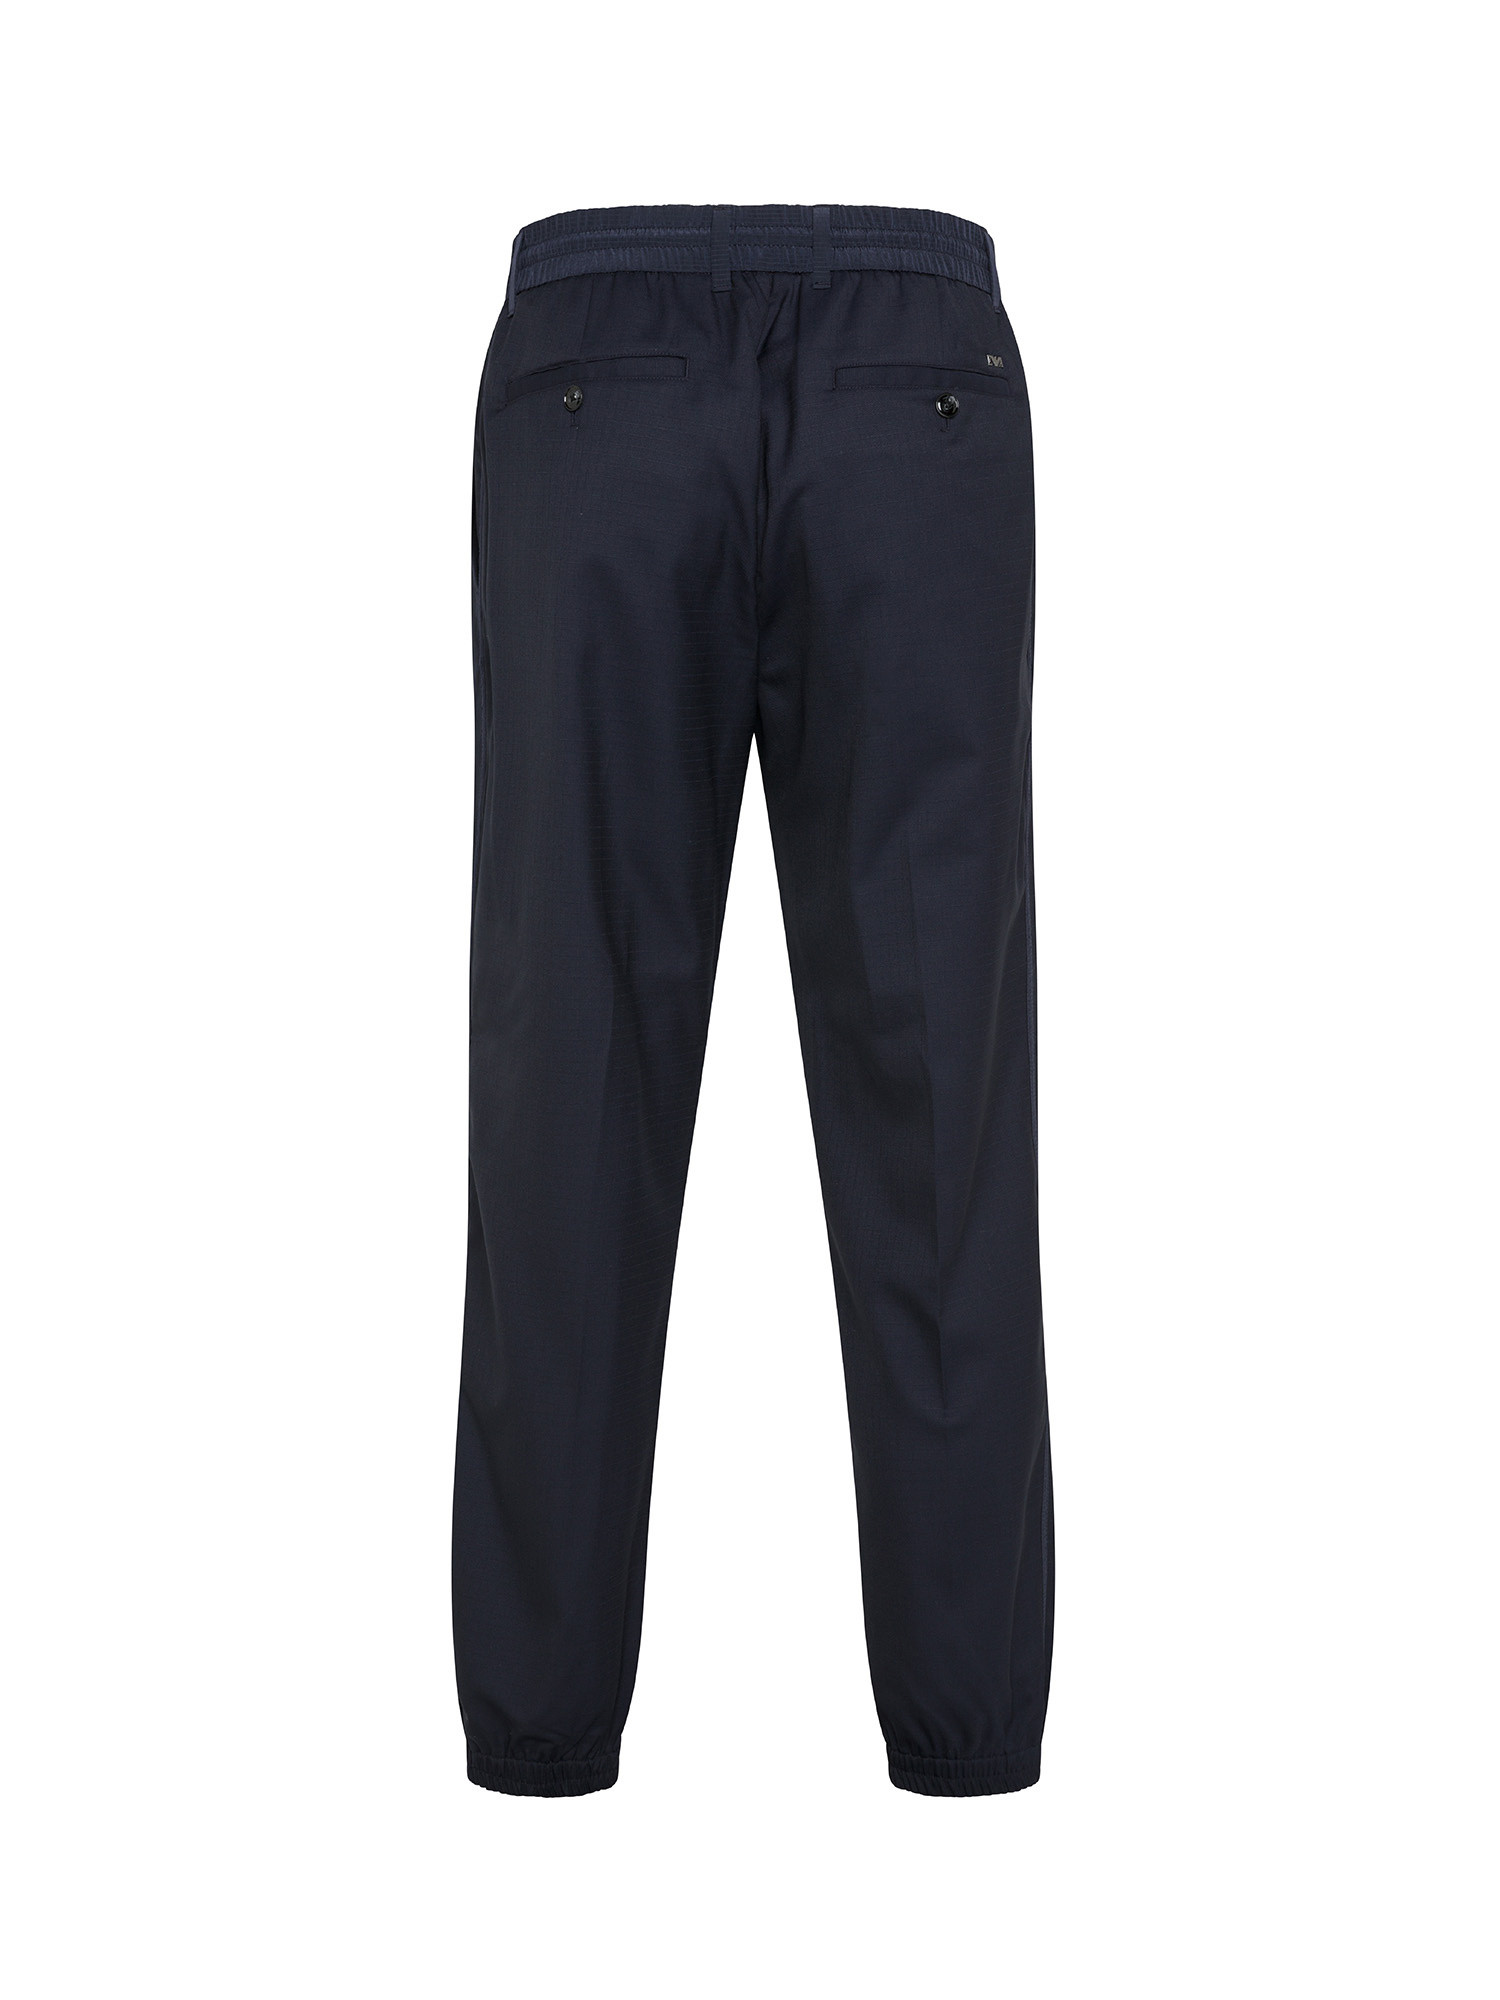 Emporio Armani - Pantaloni in misto lana, Blu scuro, large image number 1